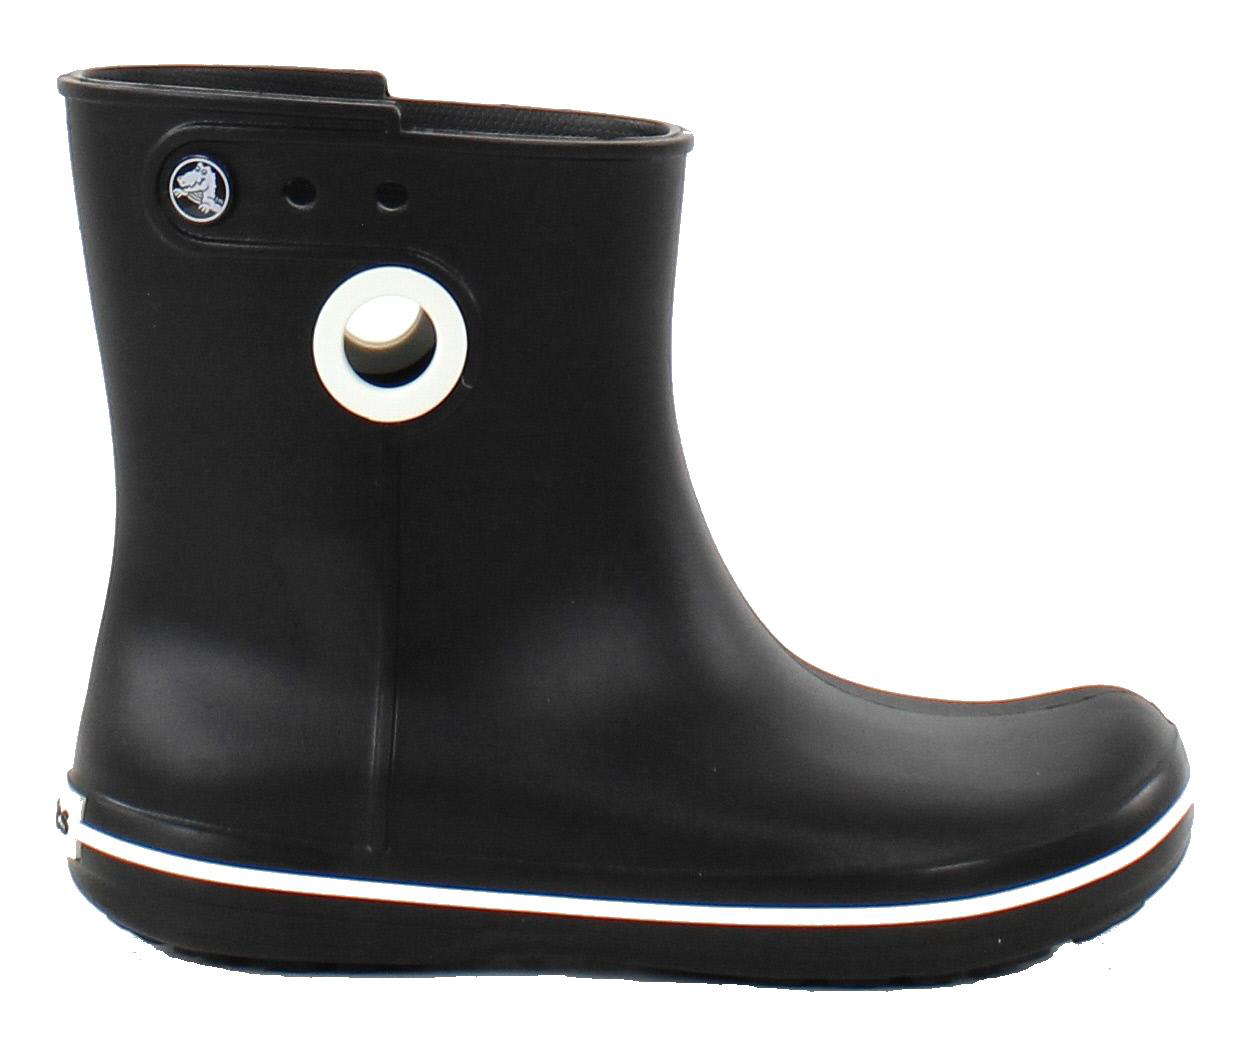 Crocs boots Jaunt black Stilettoshop.eu webstore